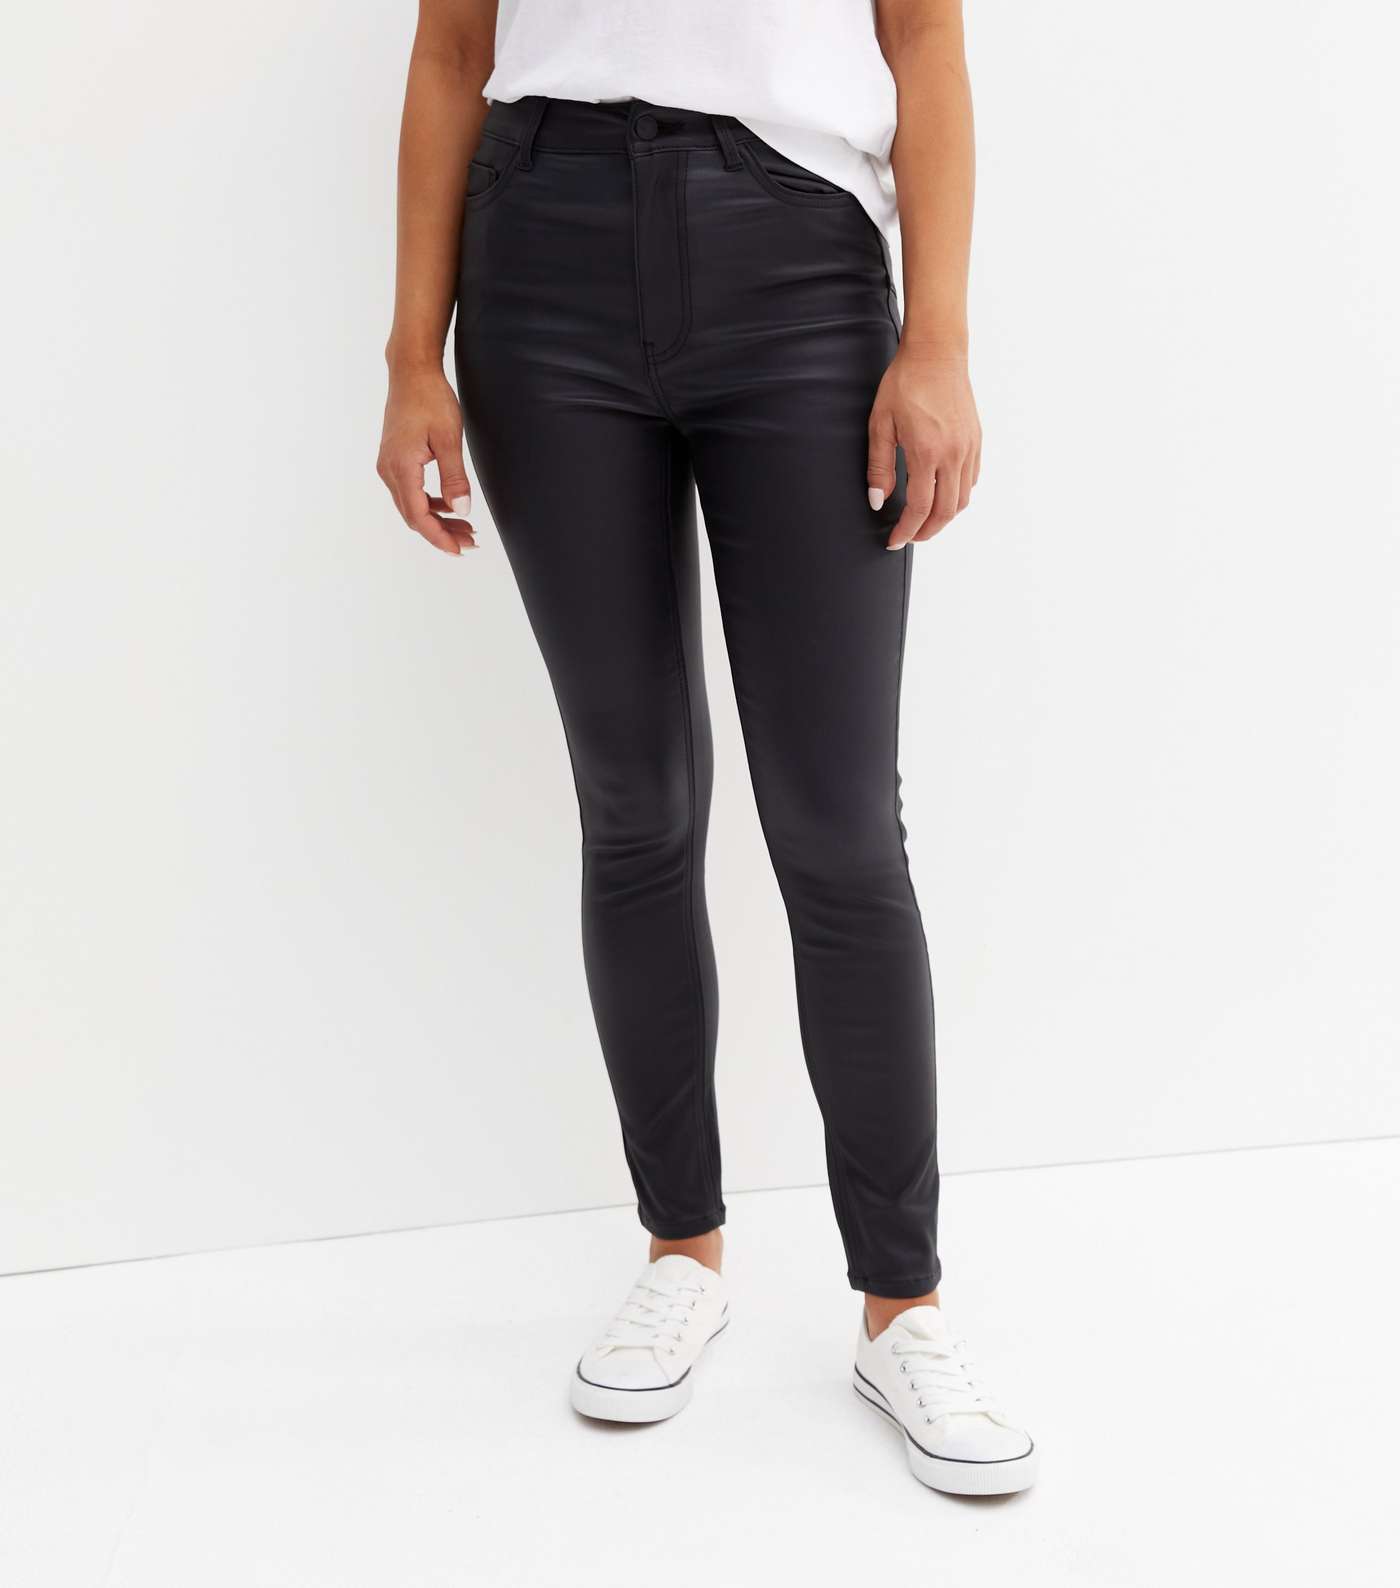 Petite Black Coated Leather-Look Lift & Shape Jenna Skinny Jeans Image 2